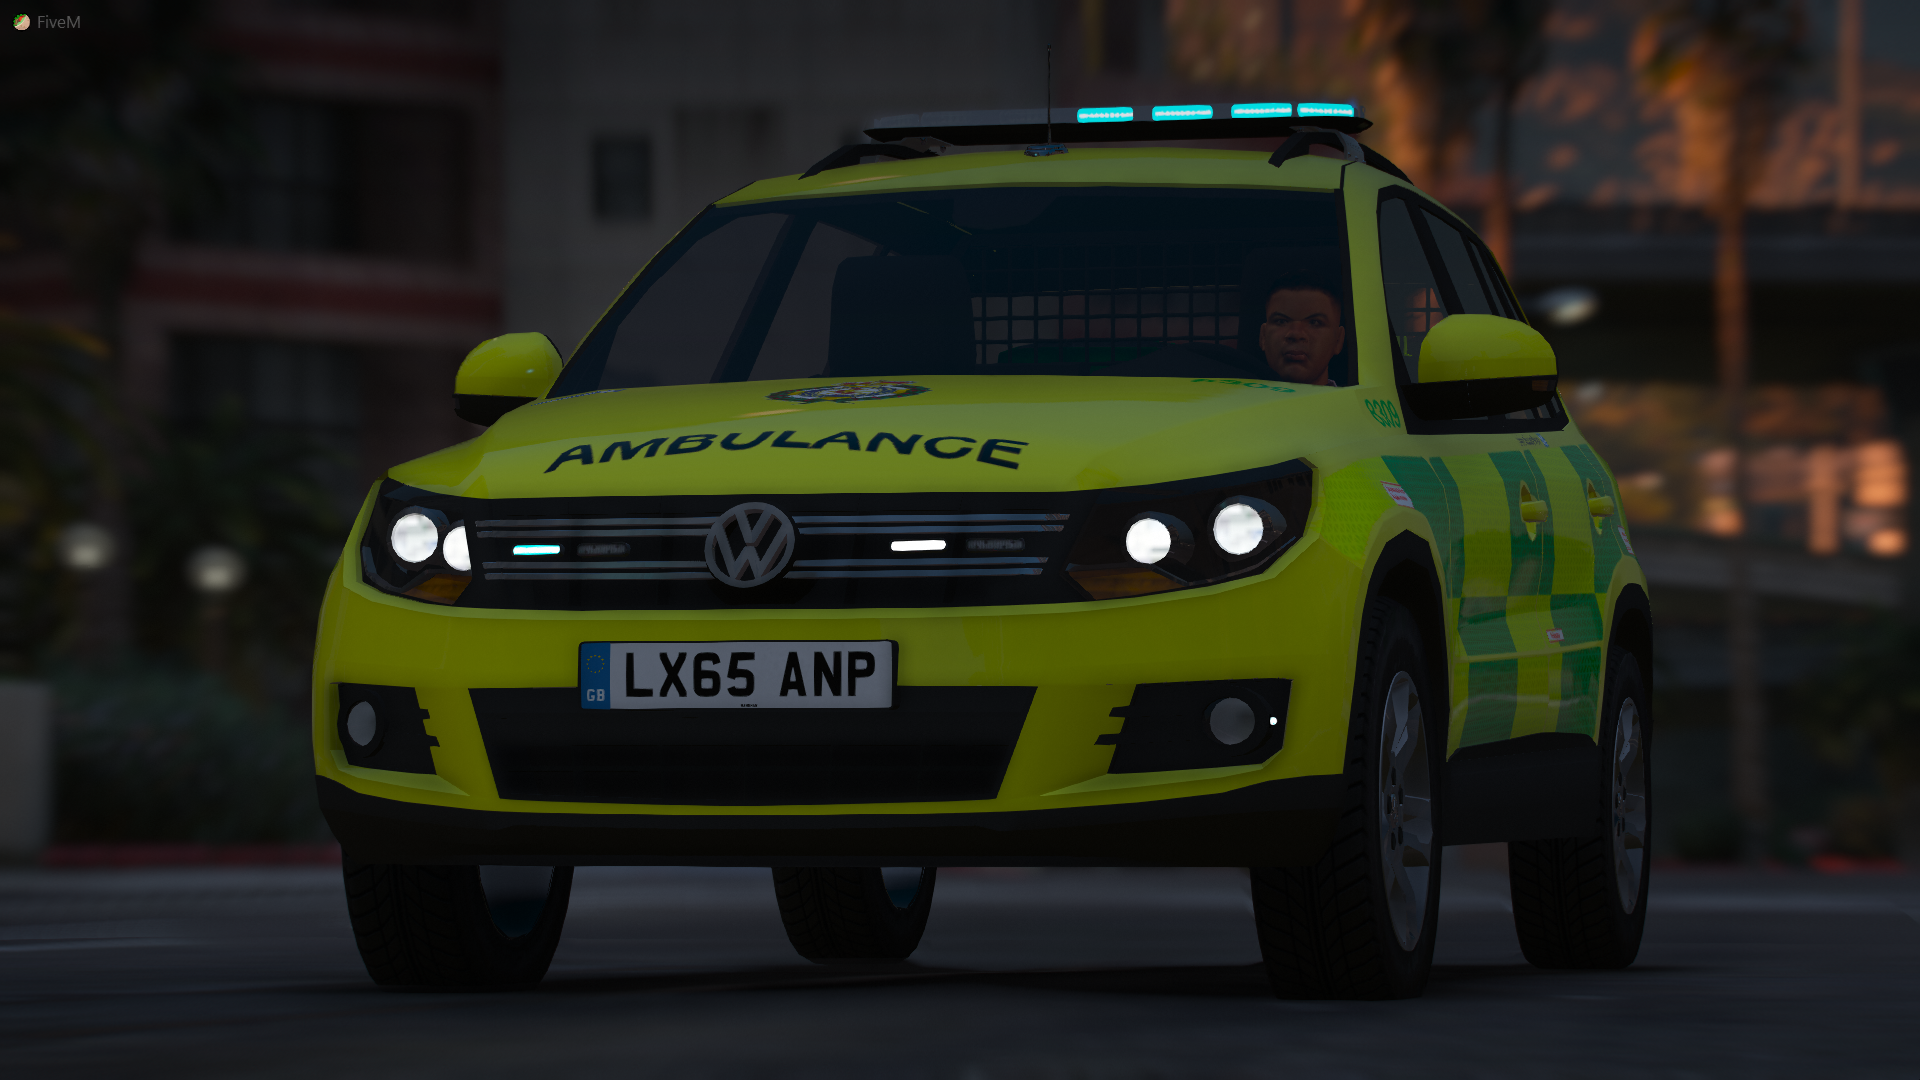 [ELS] 2015 London Ambulance Service VW Tiguan RRV GTA5